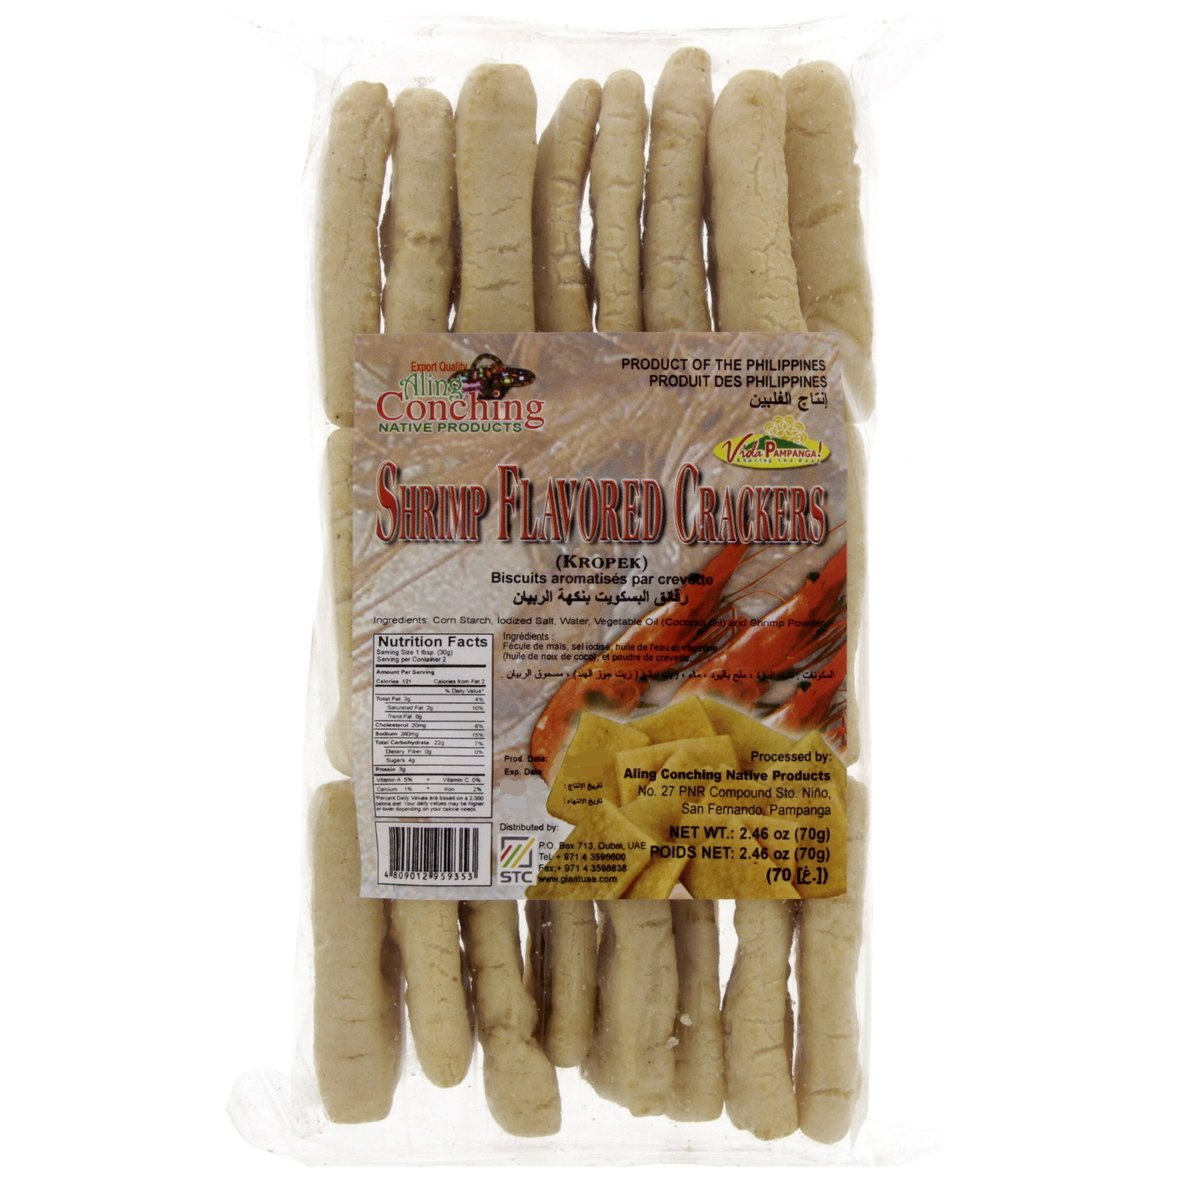 Aling Conching Shrimp Flavored Crackers (Kropek) 70 g